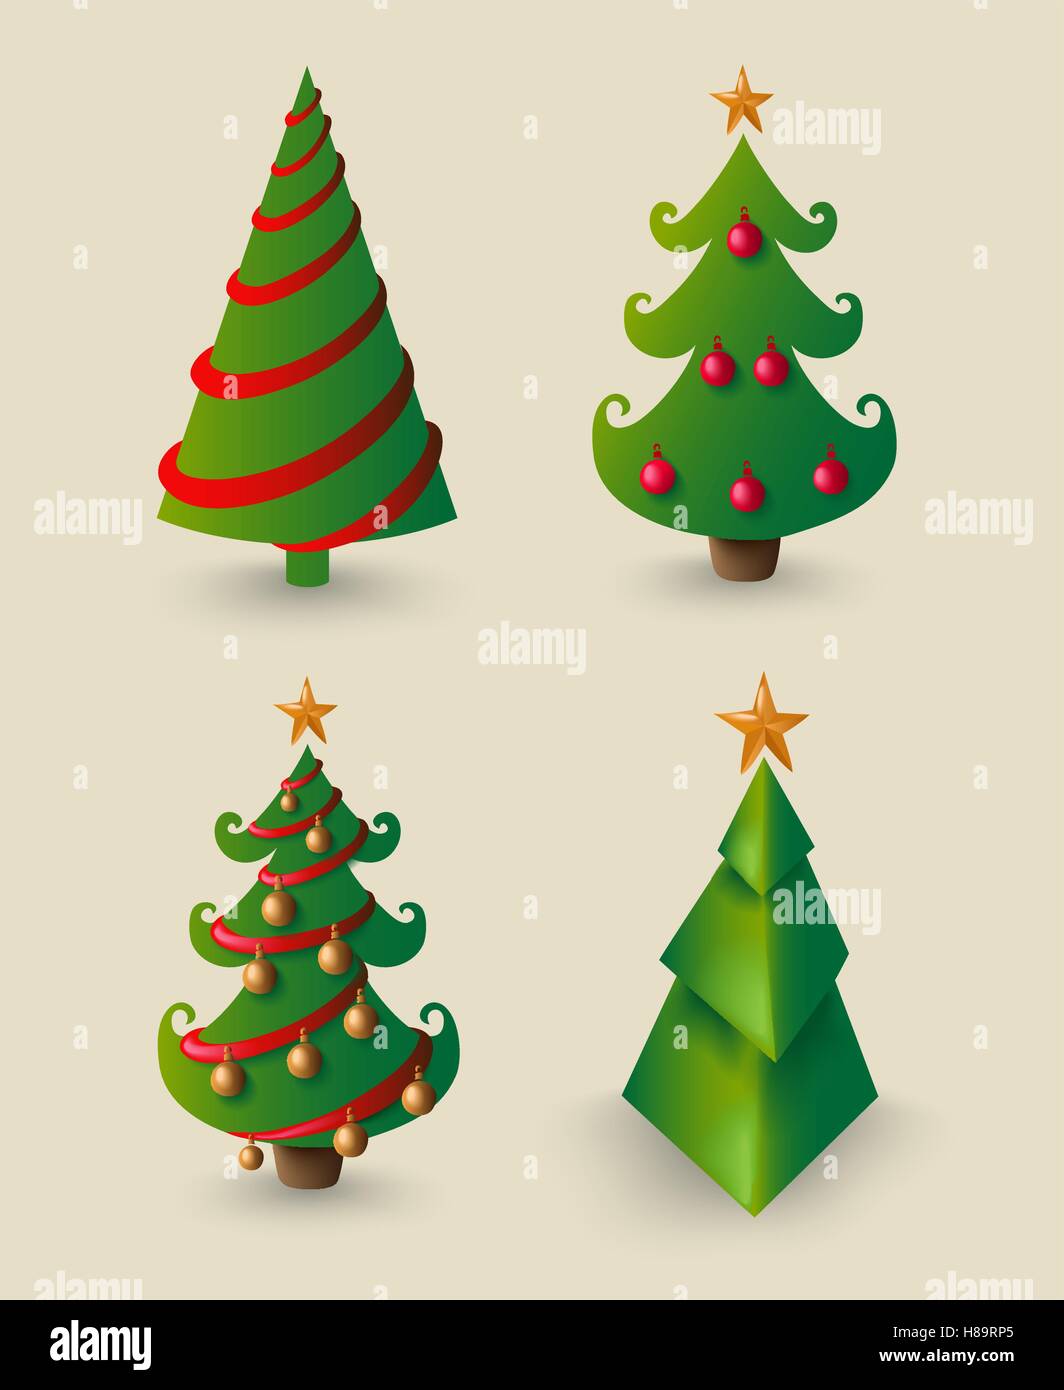 Cartoon ornaments Stock Vector Images - Alamy